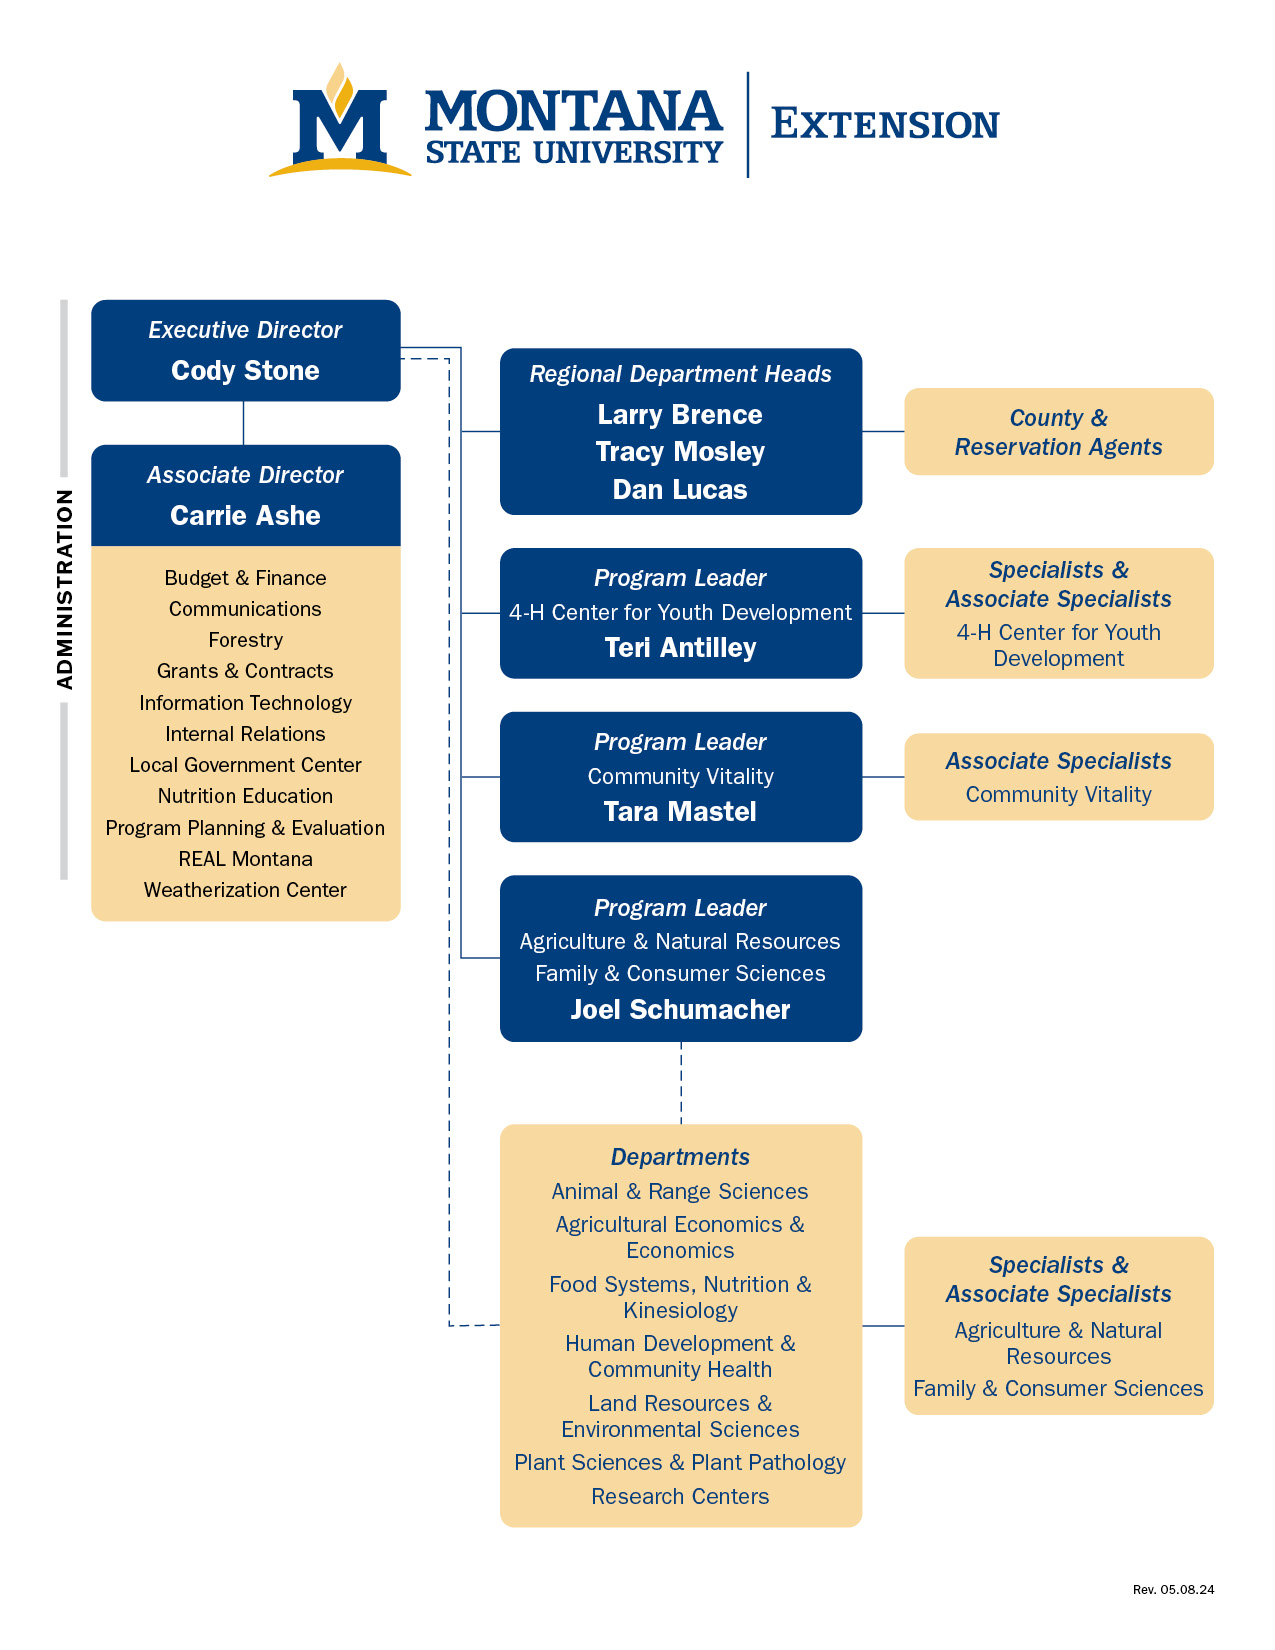 Extension organization chart 